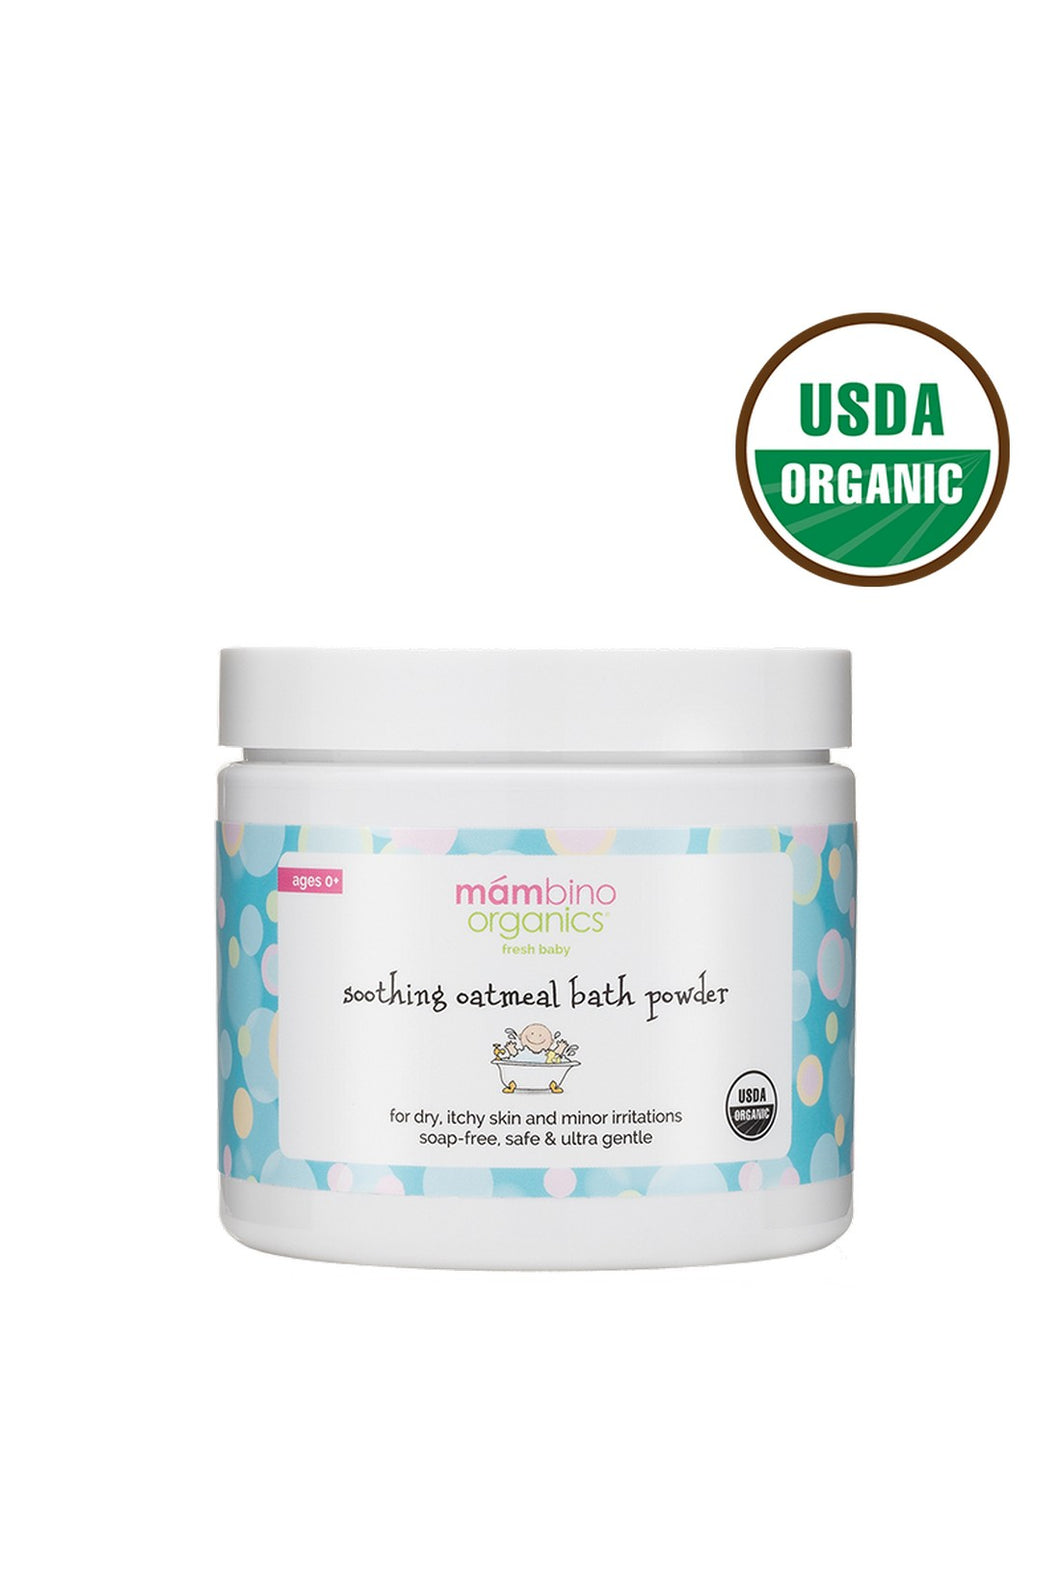 Mambino Organics Soothing Oatmeal Bath Powder 1